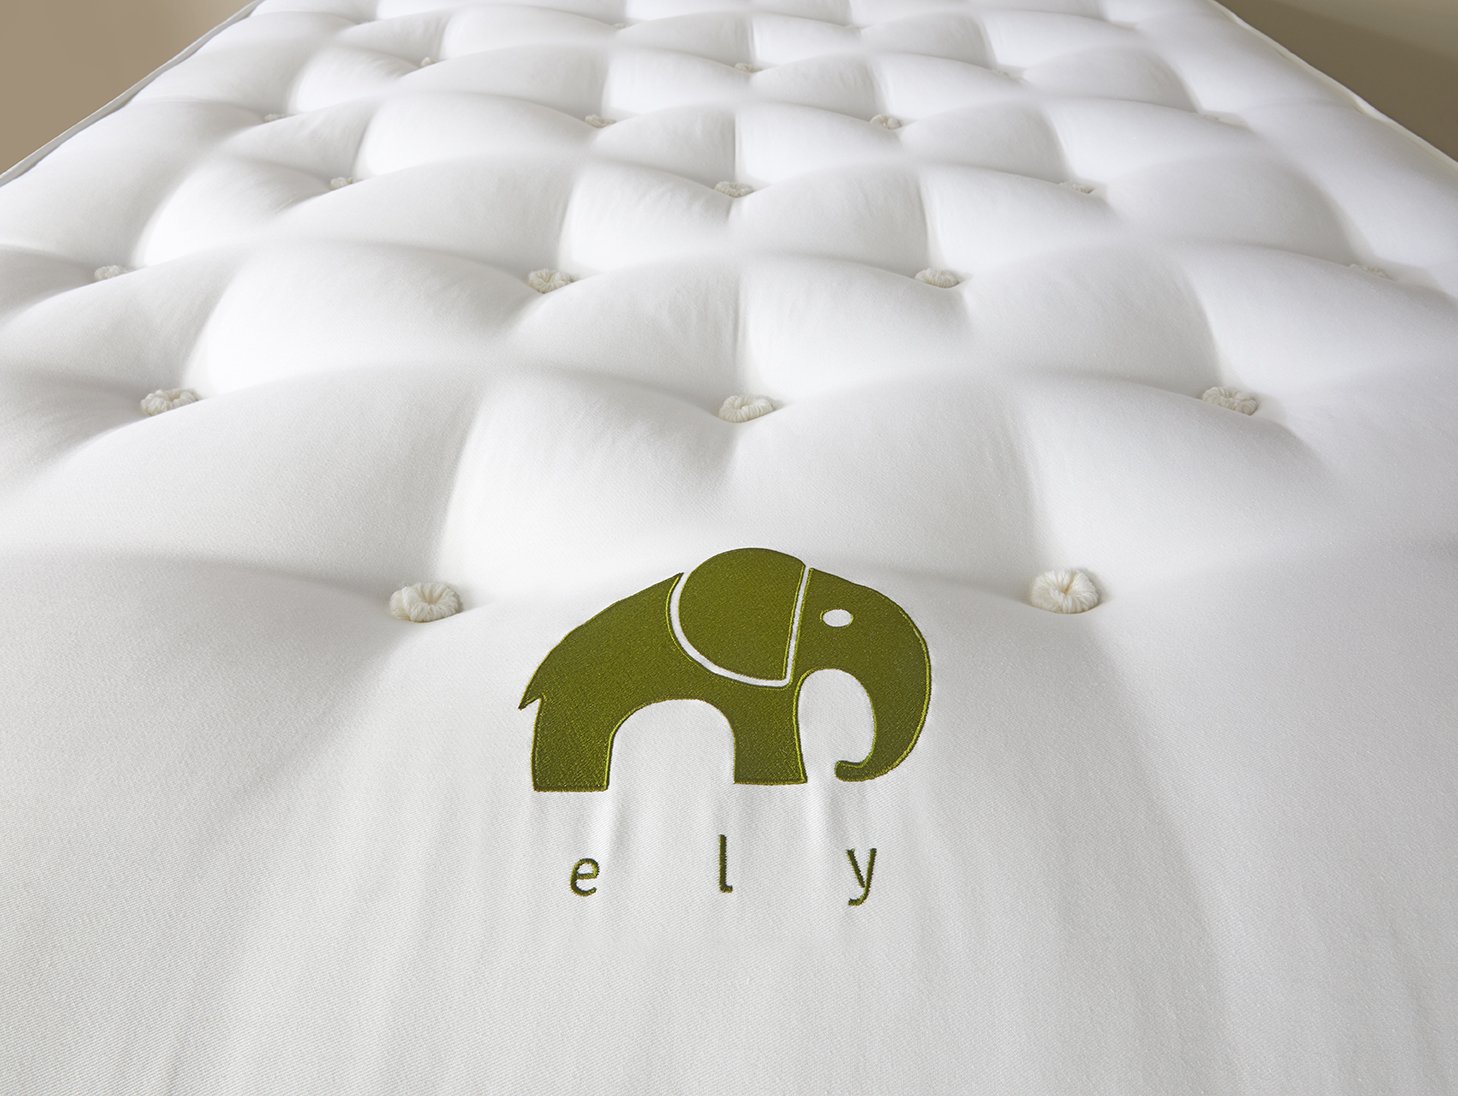 ely-mattress